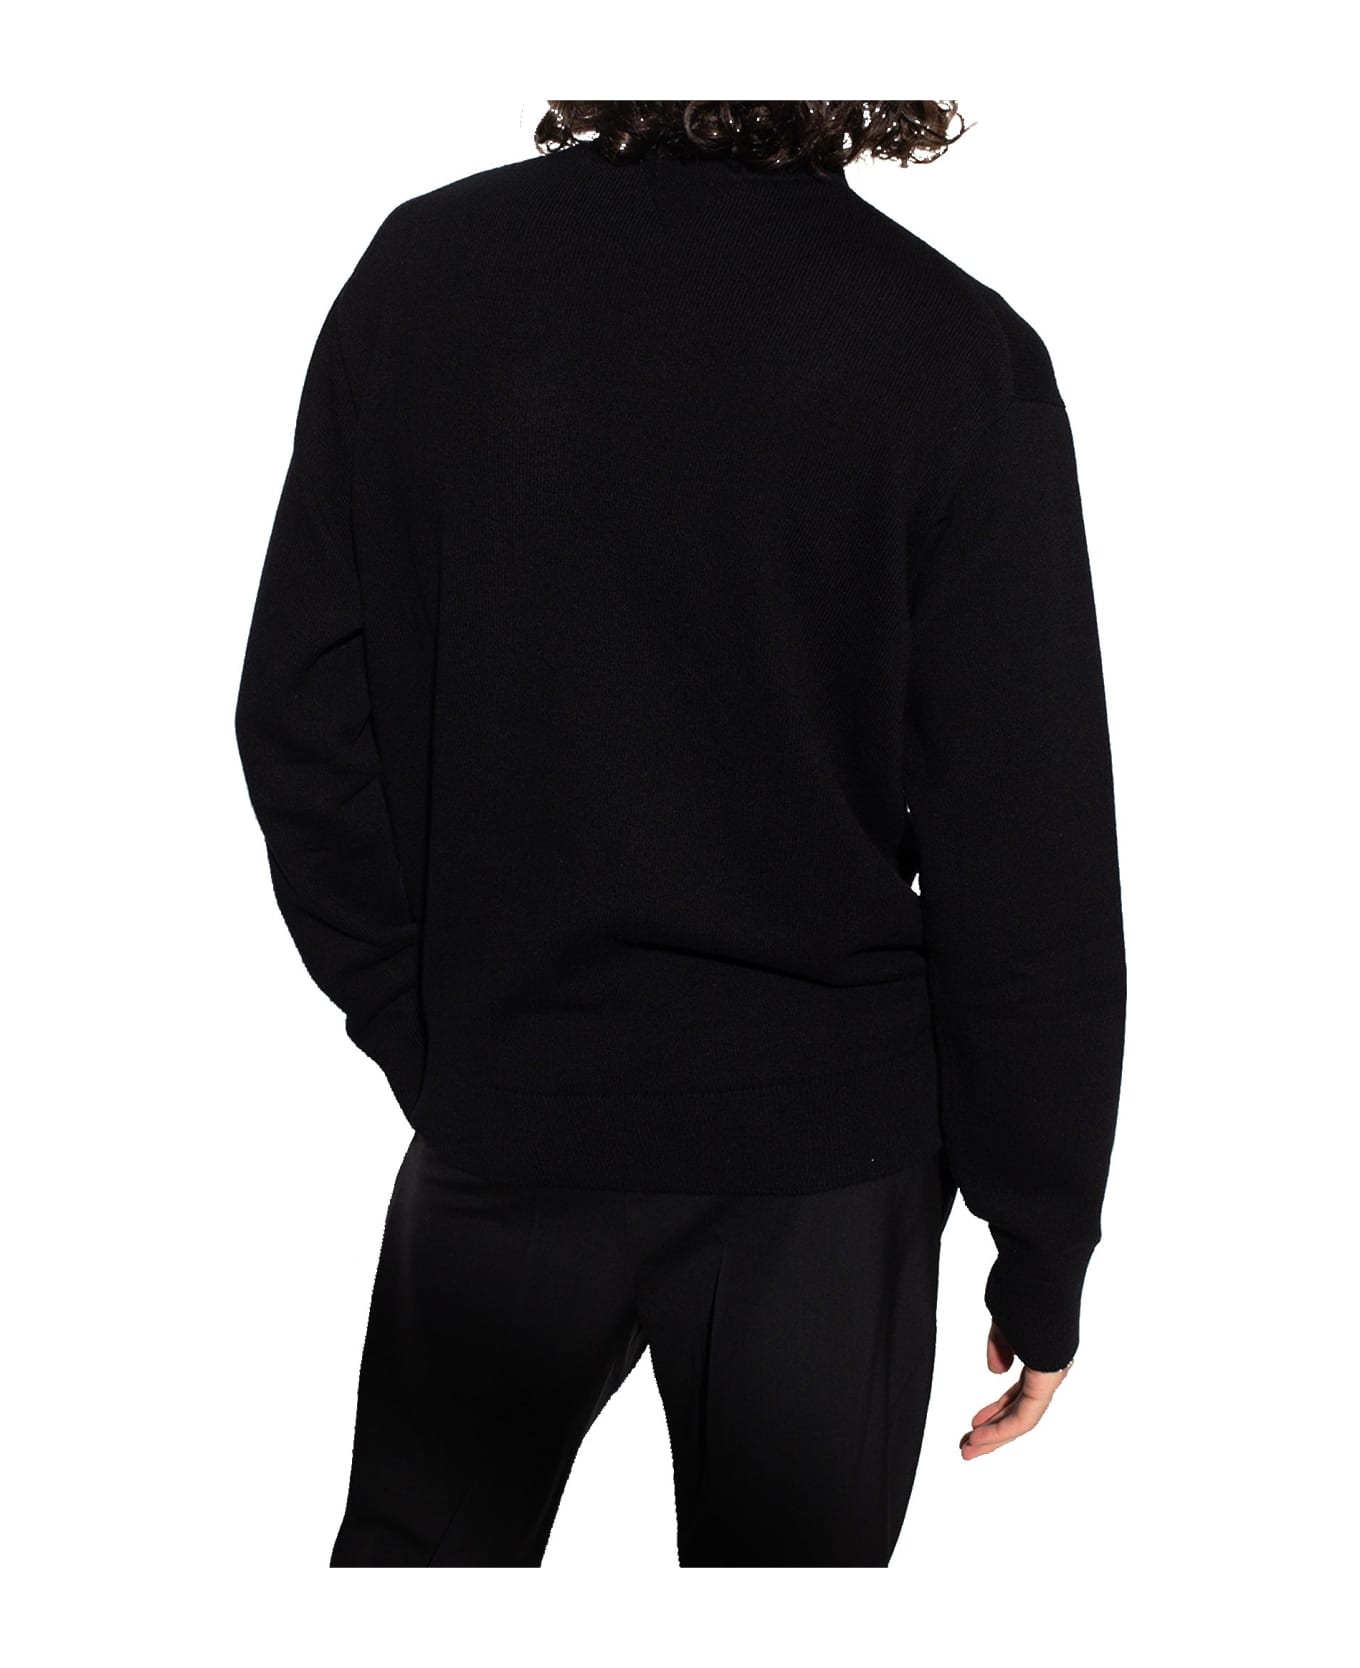 Bottega Veneta Cashmere Turtleneck Sweater - Black